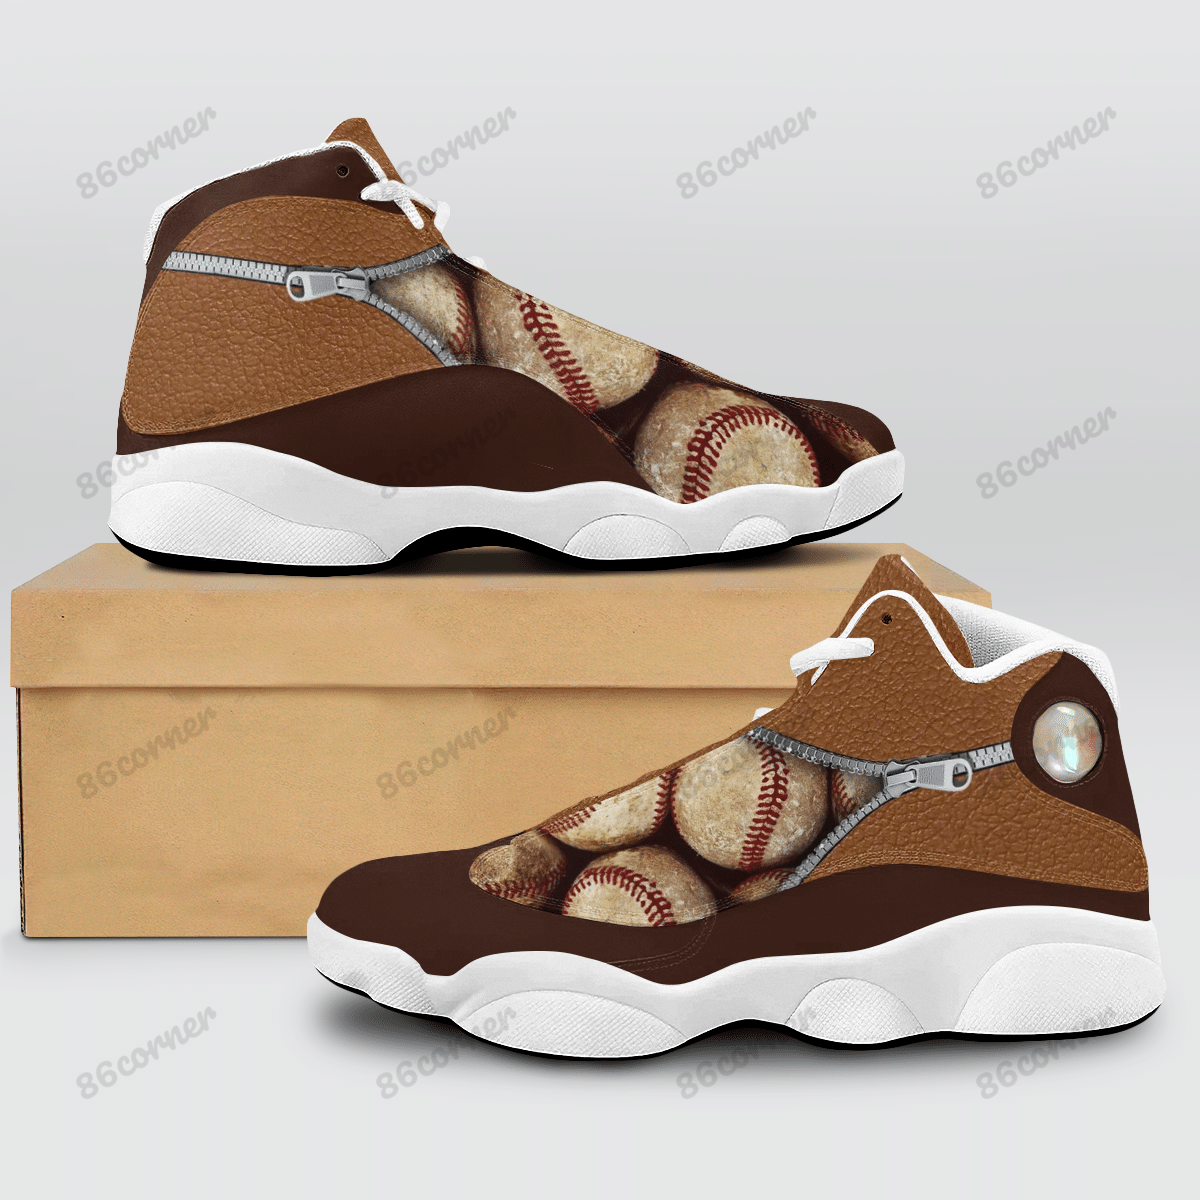 Baseball 13 Sneakers XIII Shoes